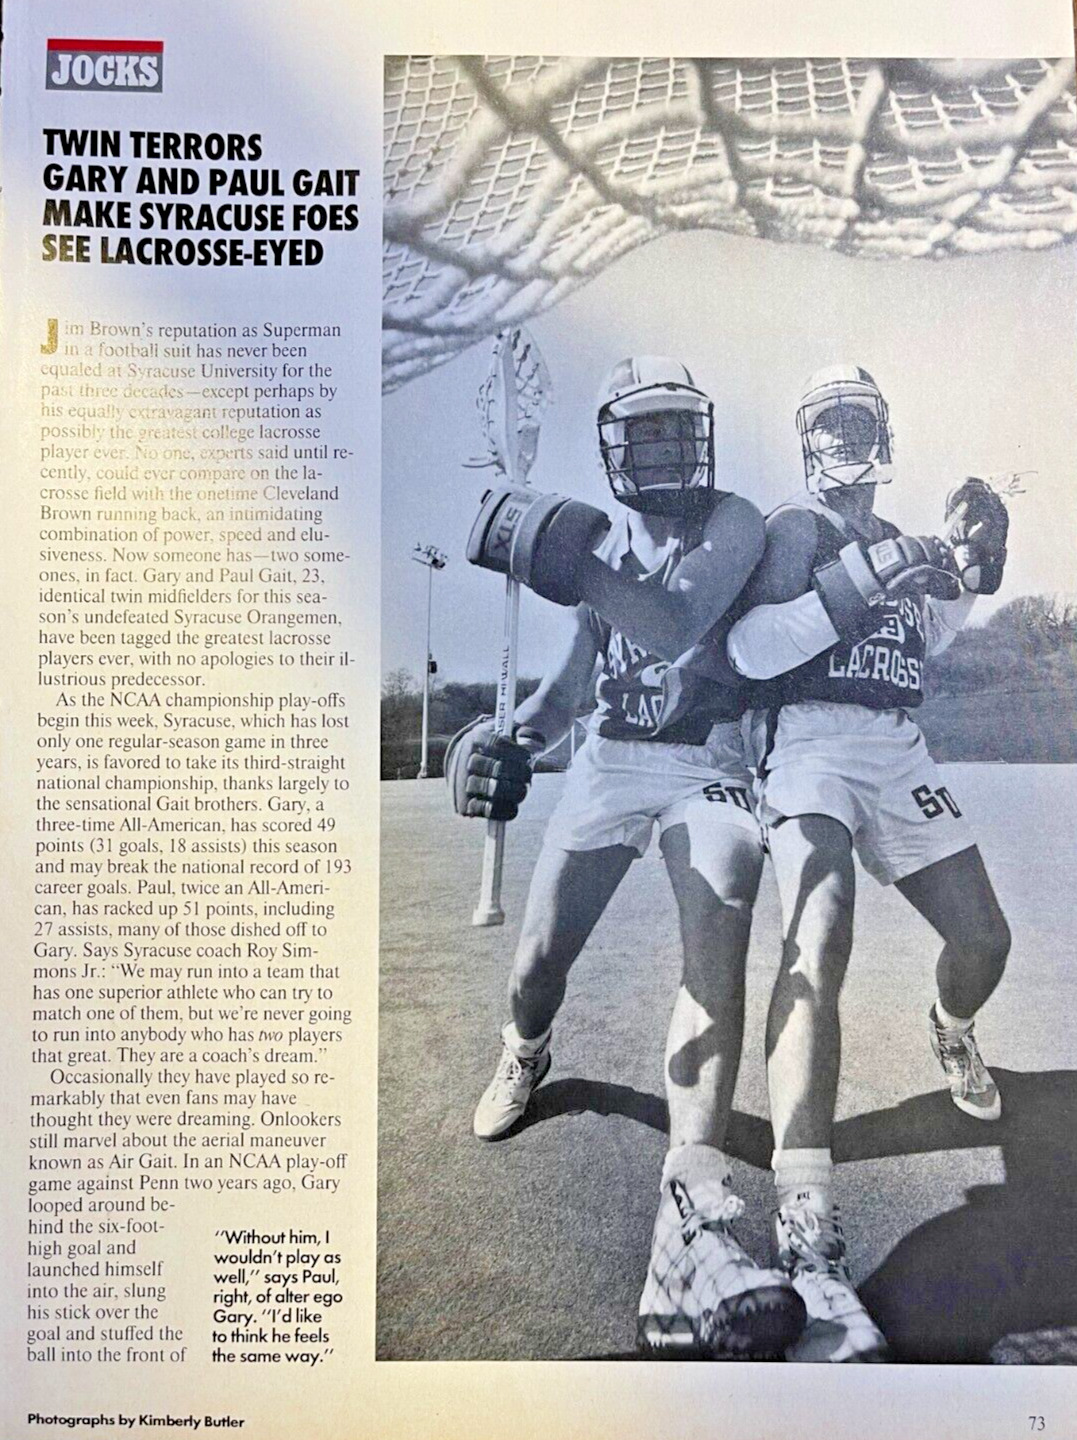 1990 Gary and Paul Gait Syracuse University Lacrosse Team